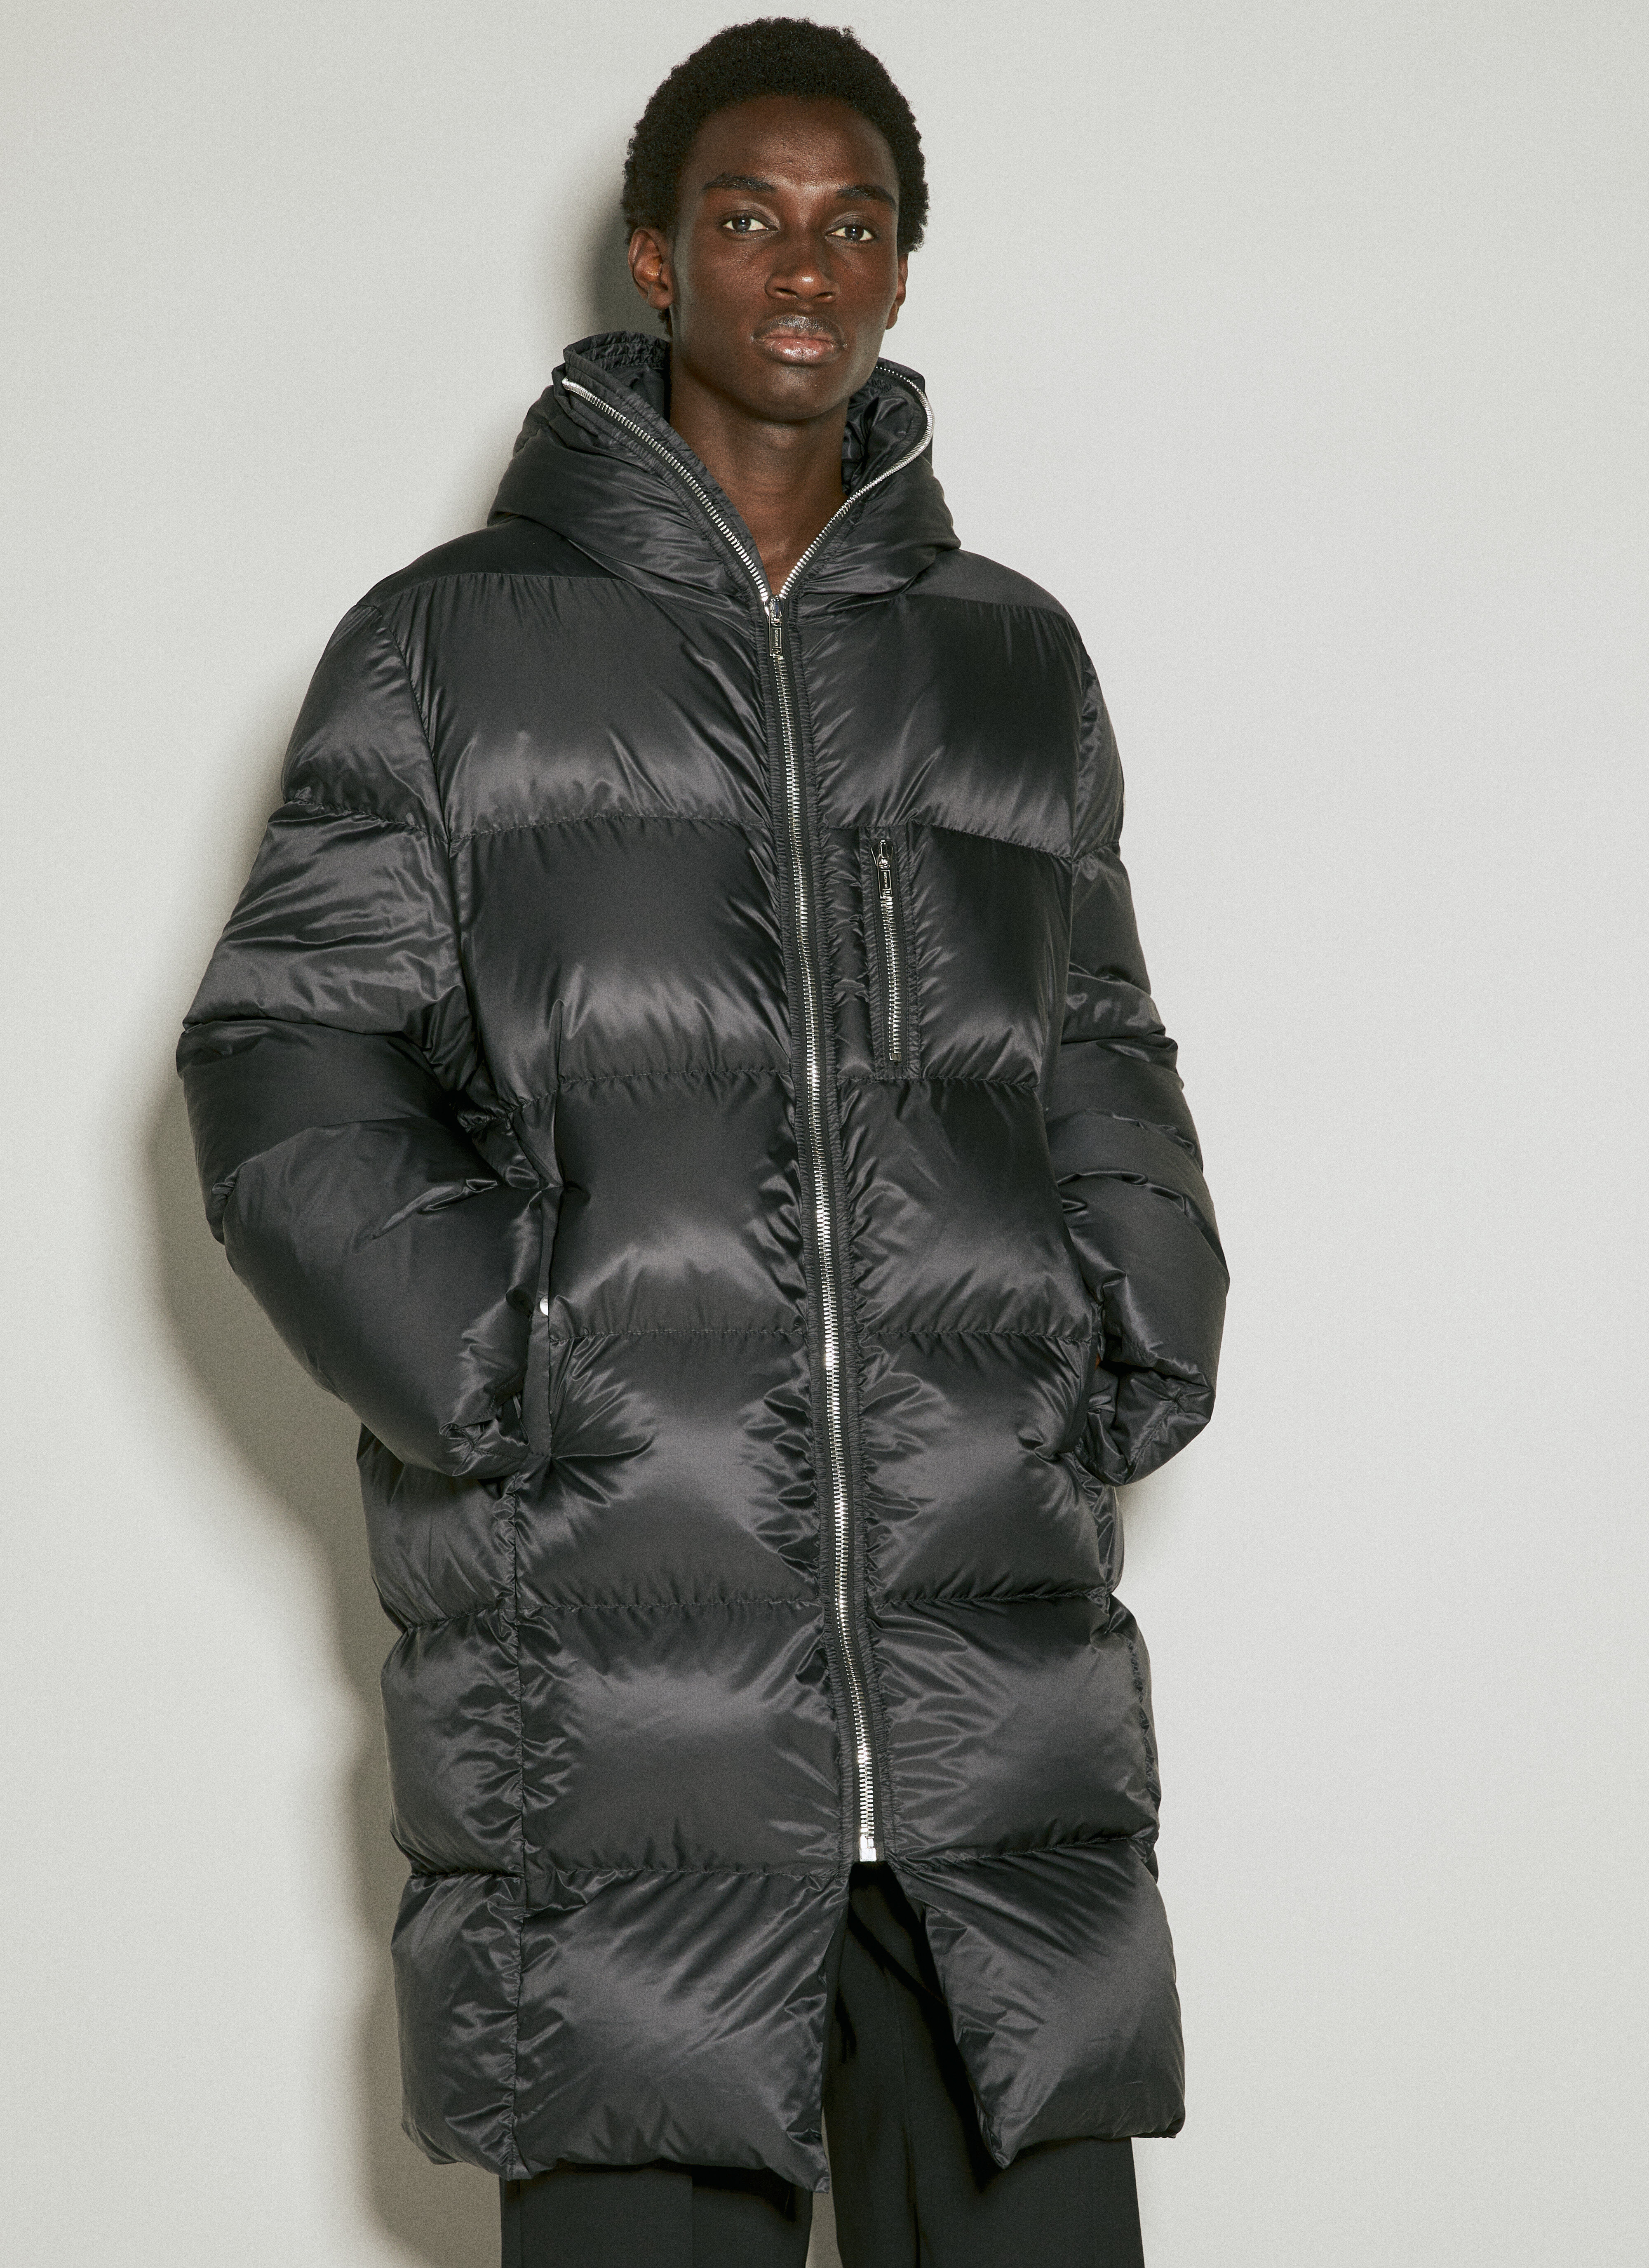 Moncler x Roc Nation designed by Jay-Z Gimp Long Down Coat Black mrn0156002